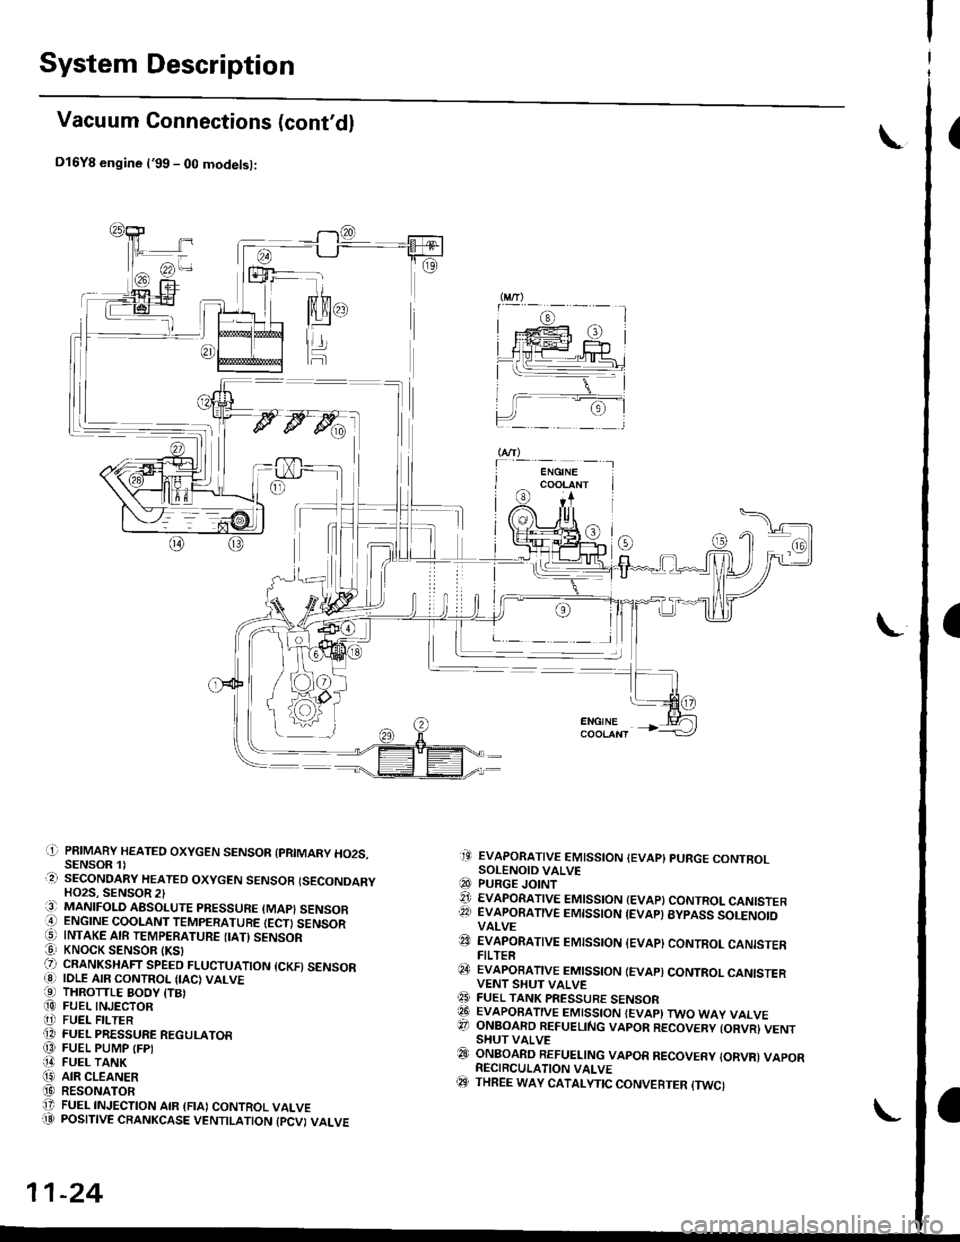 HONDA CIVIC 1996 6.G Workshop Manual System Description
Vacuum Connections (contdl
D16Y8 engine l99 - 00 modetsl:
(]-i PAIMARY HEATEO OXYGEN SENSOR {PRIMARY HO2S,SENSOR 1)..2r SECONOARY HEATEO OXycEN SENSOB ISECONDARYHO2S, SENSOR 2li3)